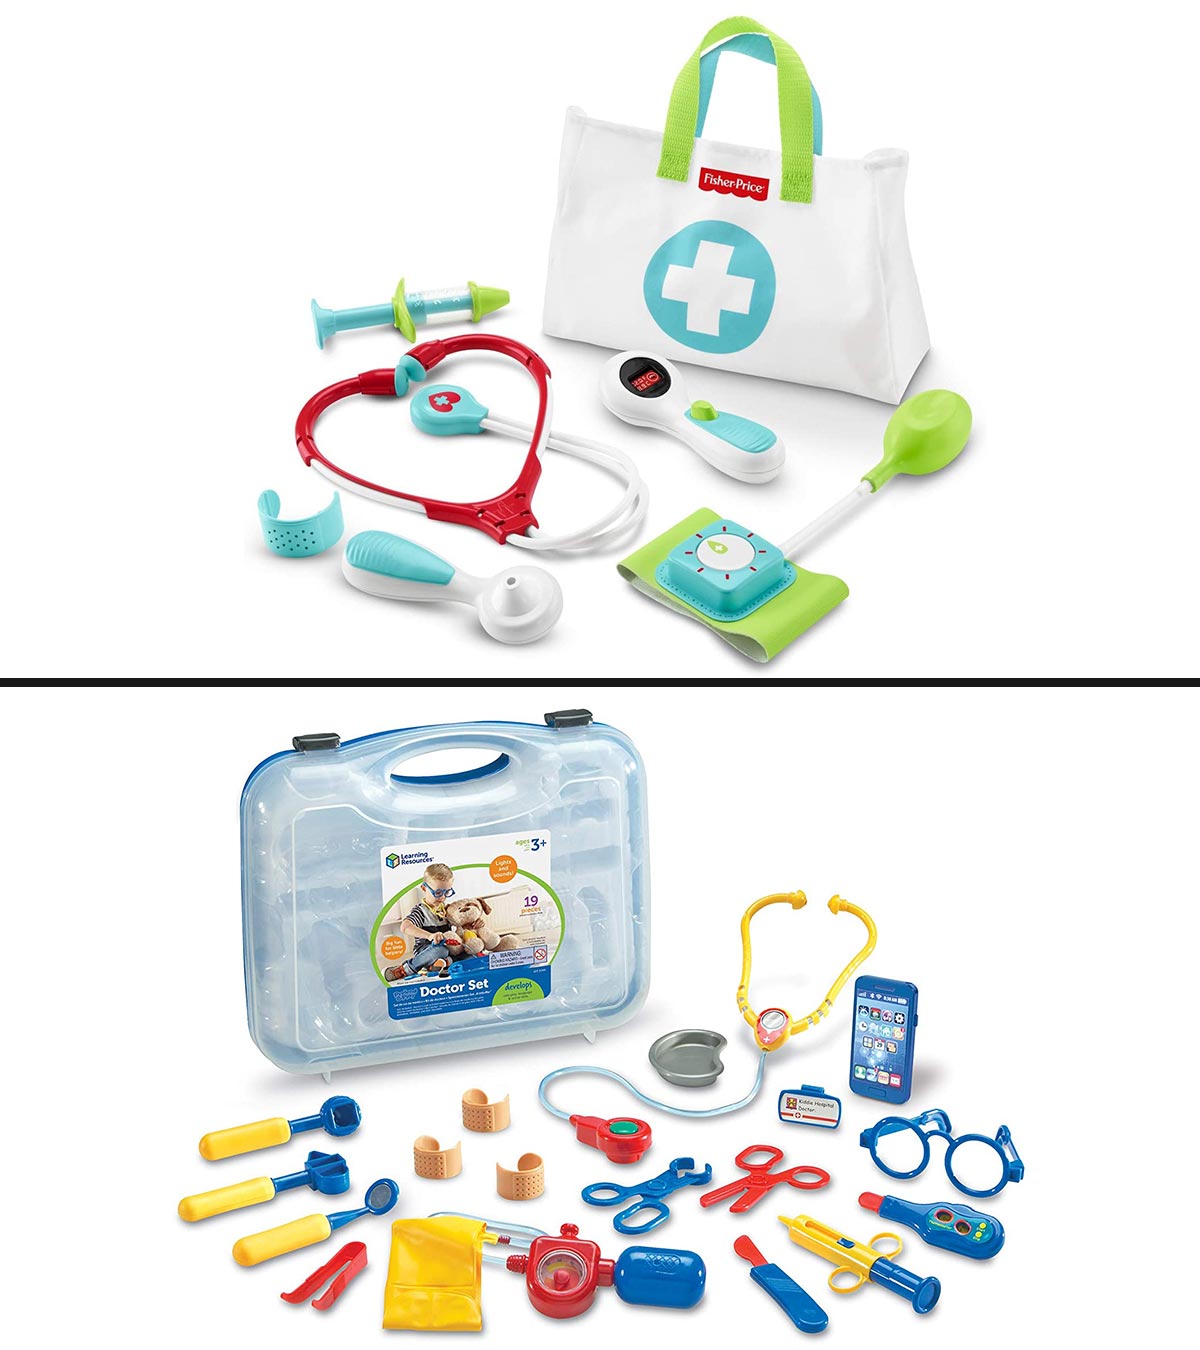 https://www.momjunction.com/wp-content/uploads/2020/04/15-Best-Kids-Doctor-Kits-In-2020-Banner.jpg